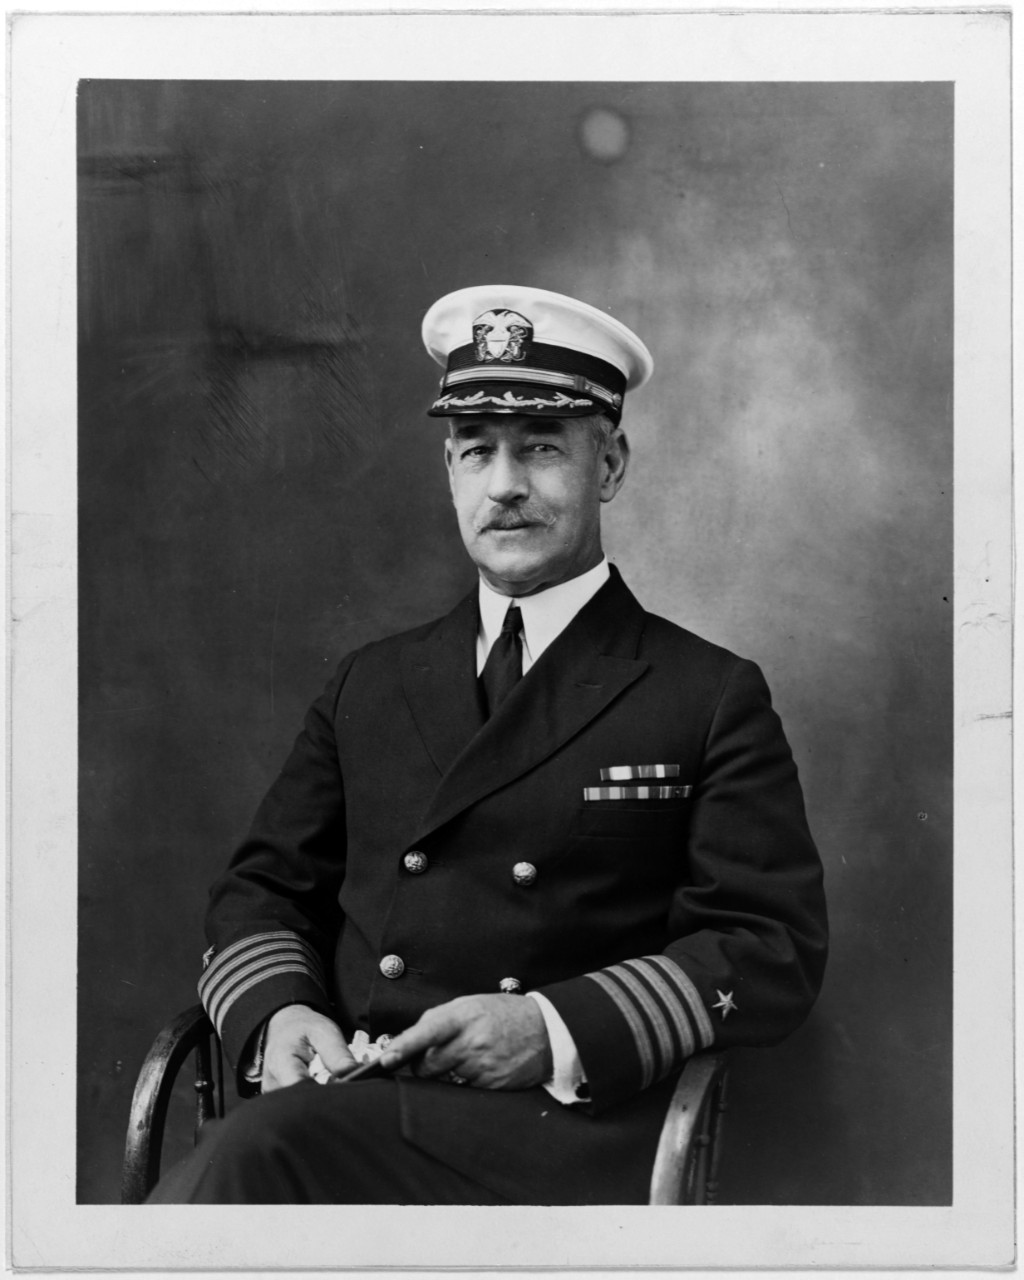 Captain John F. Hines, USN